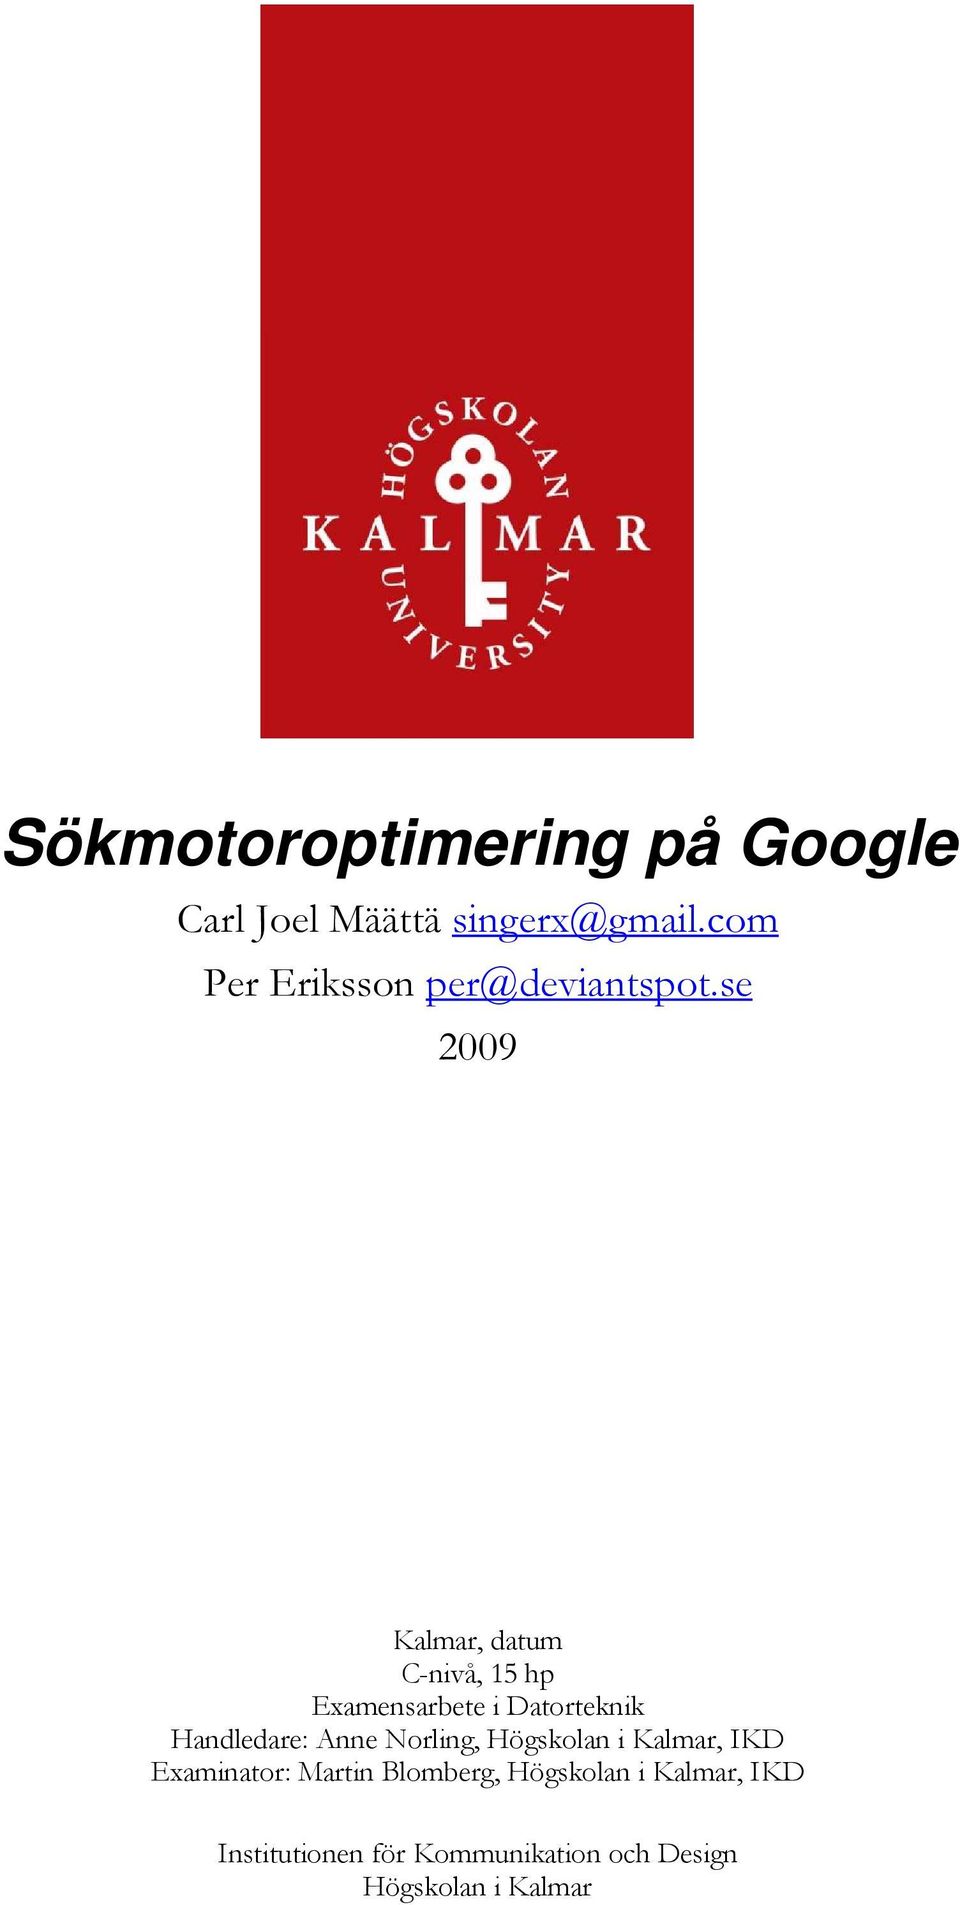 se 2009 Kalmar, datum C-nivå, 15 hp Examensarbete i Datorteknik Handledare: Anne